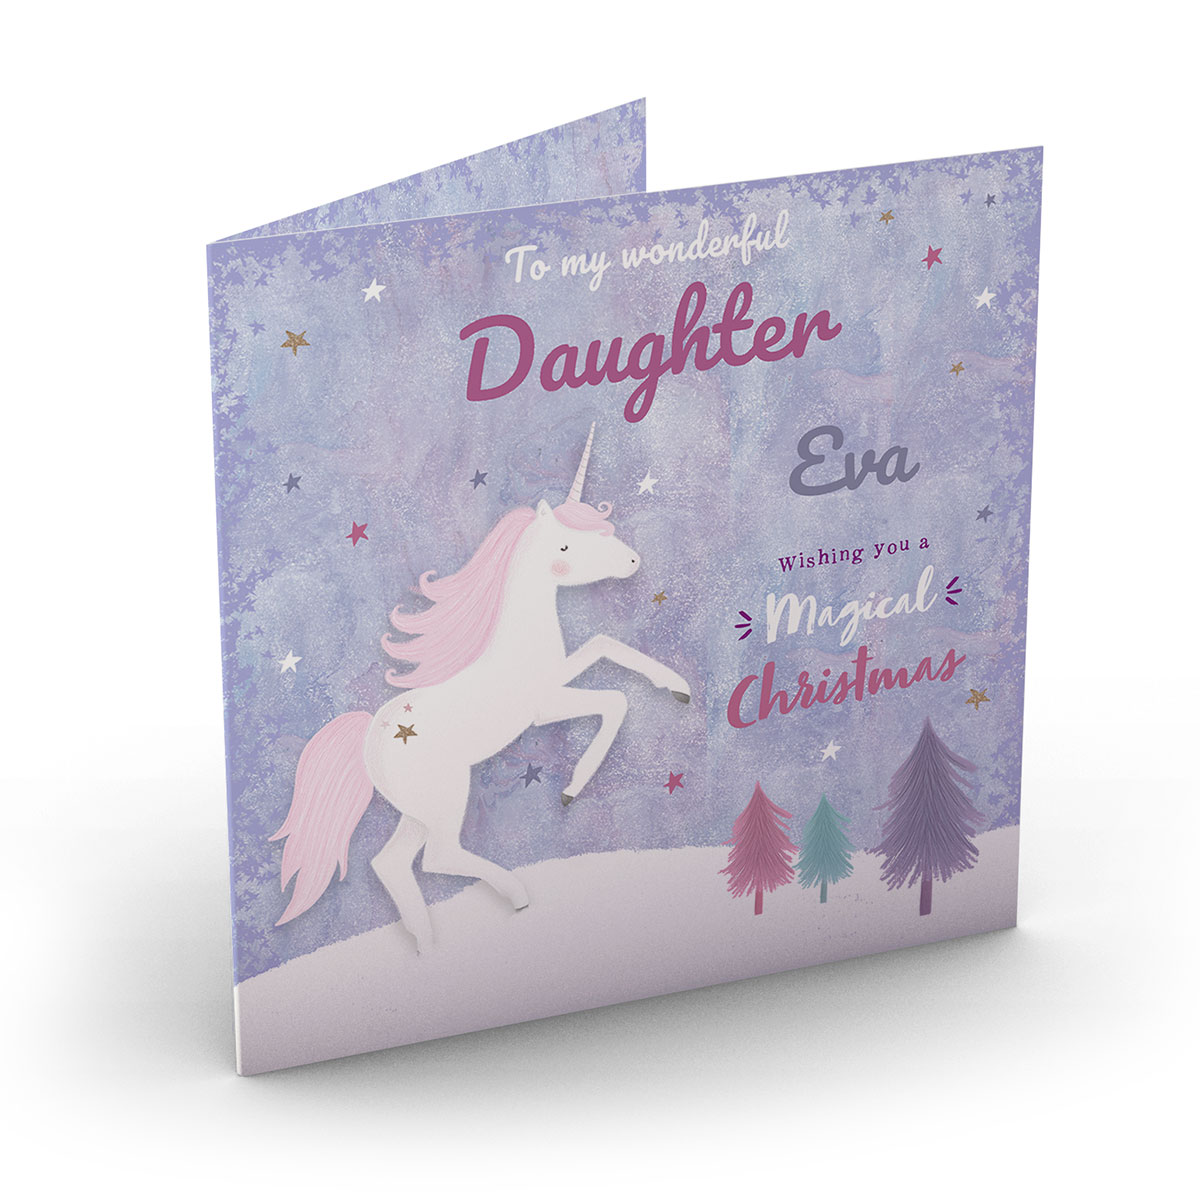 Personalised Christmas Card - Magical Christmas, Daughter